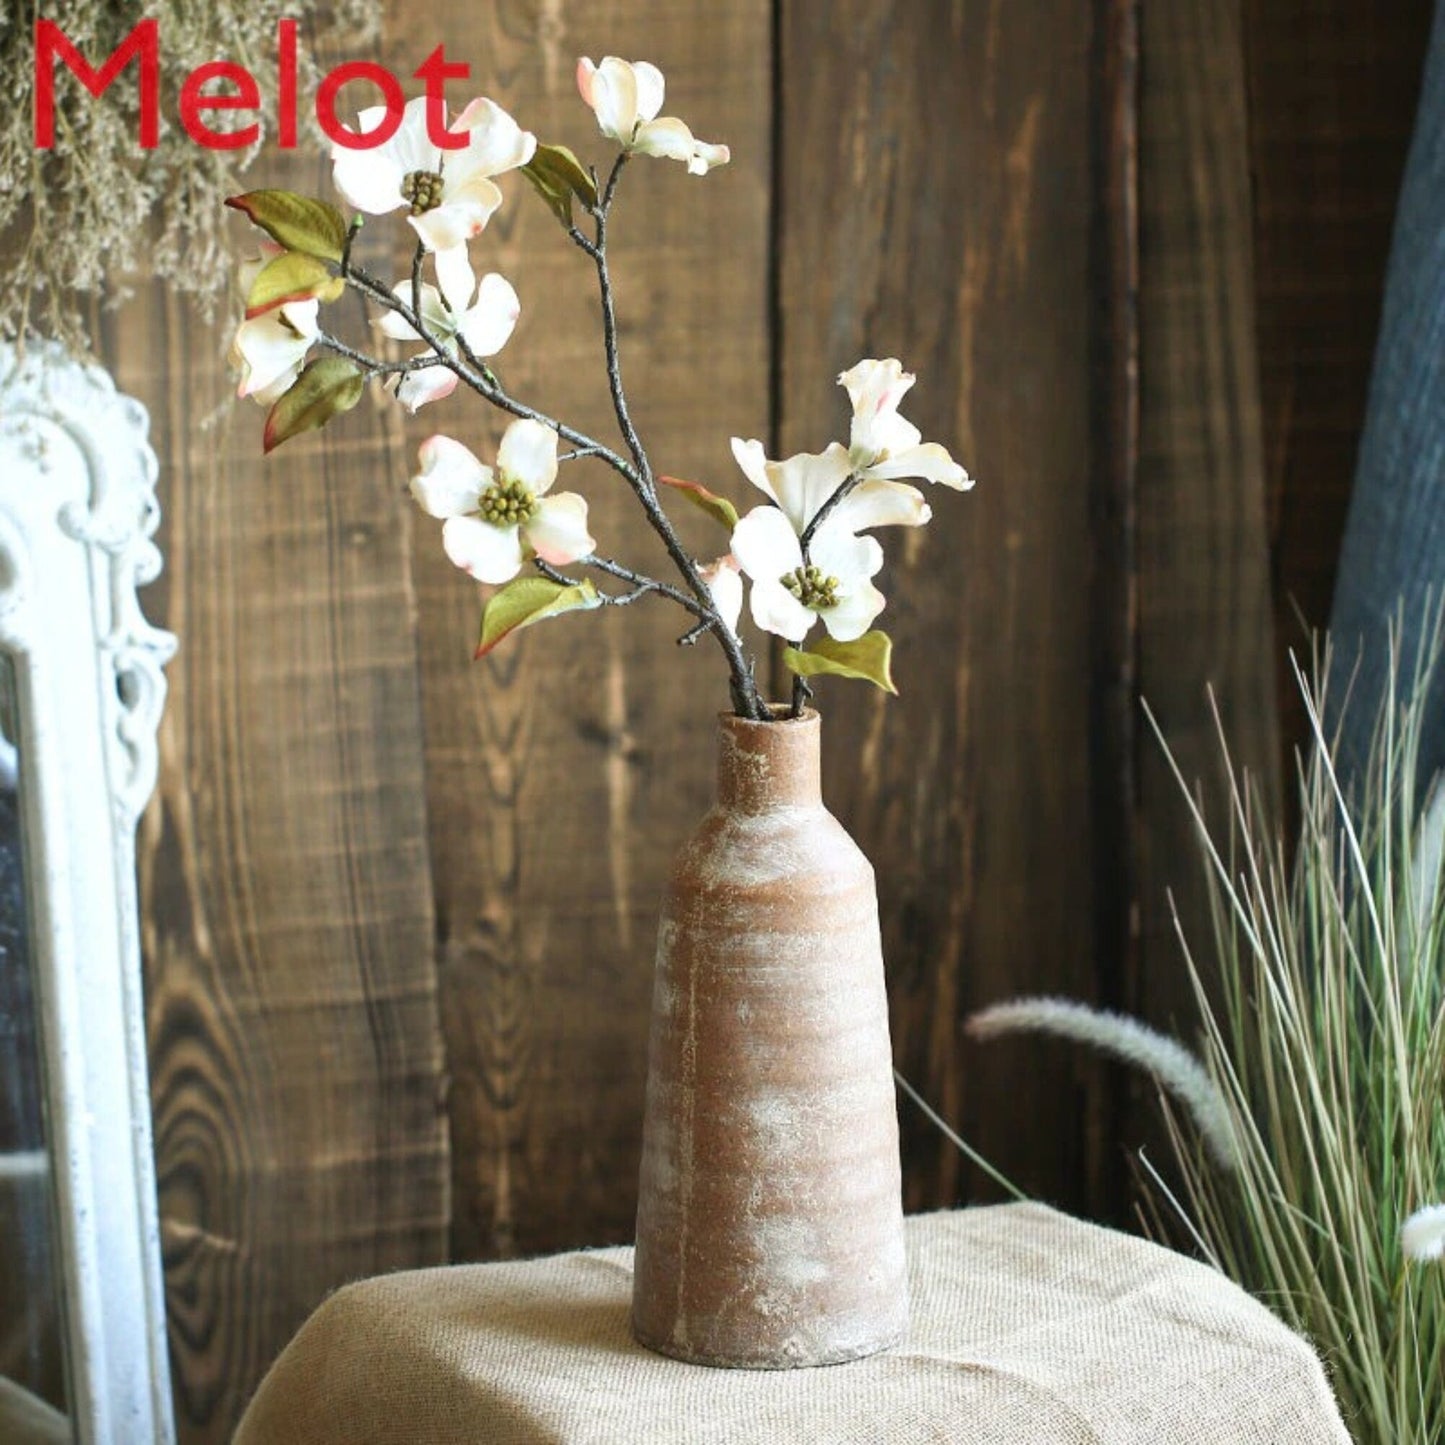 Old Textured Clay Flower Vase | Rustic, Farmhouse, Nordic, Scandinavian, Boho, Terracotta, Vases for Flowers, Flower Pots - -